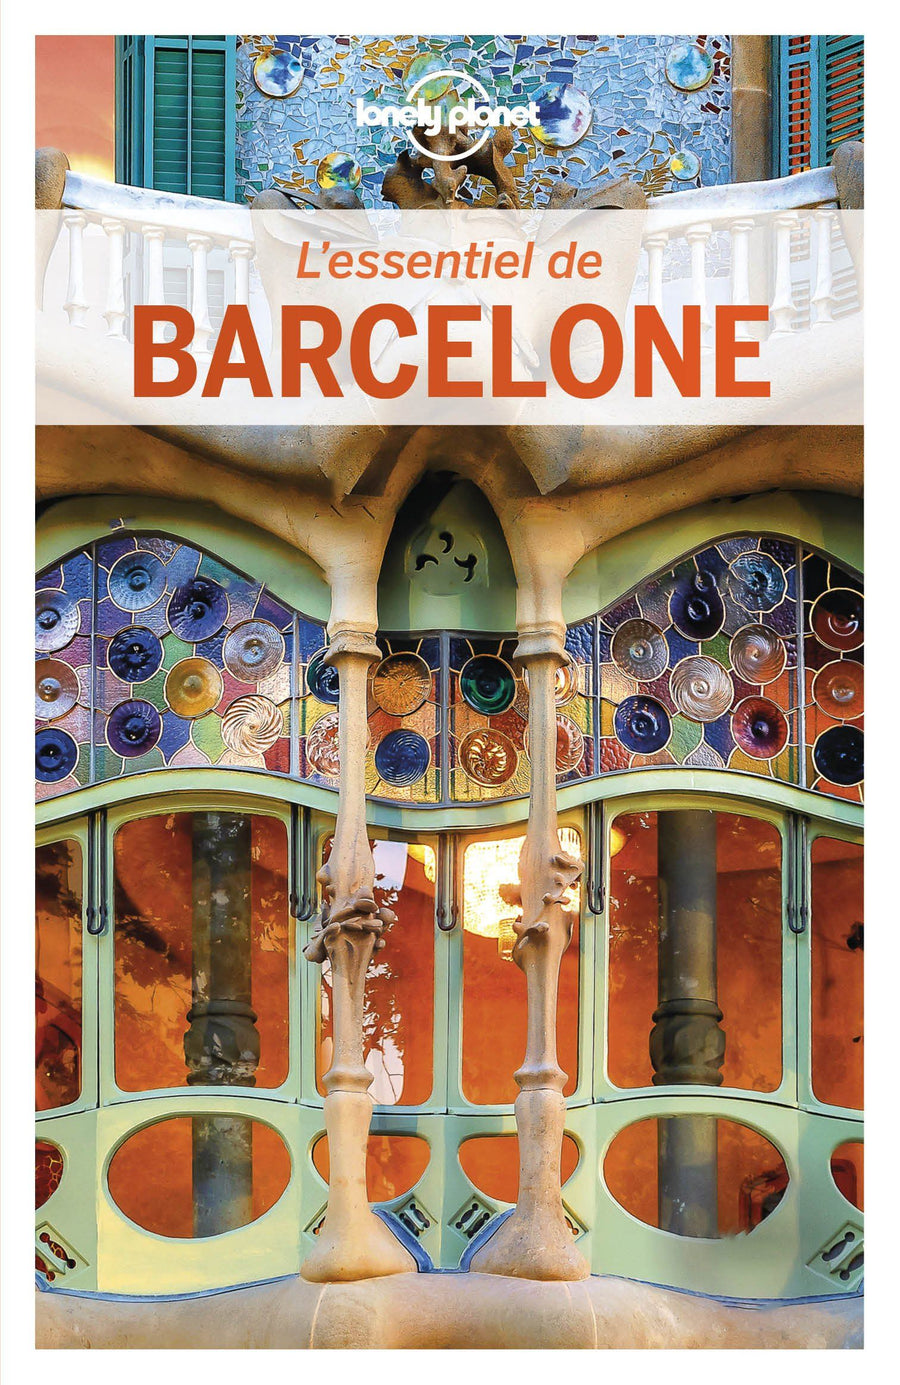 Guide de voyage - L'essentiel de Barcelone - Édition 2020 | Lonely Planet guide de voyage Lonely Planet 